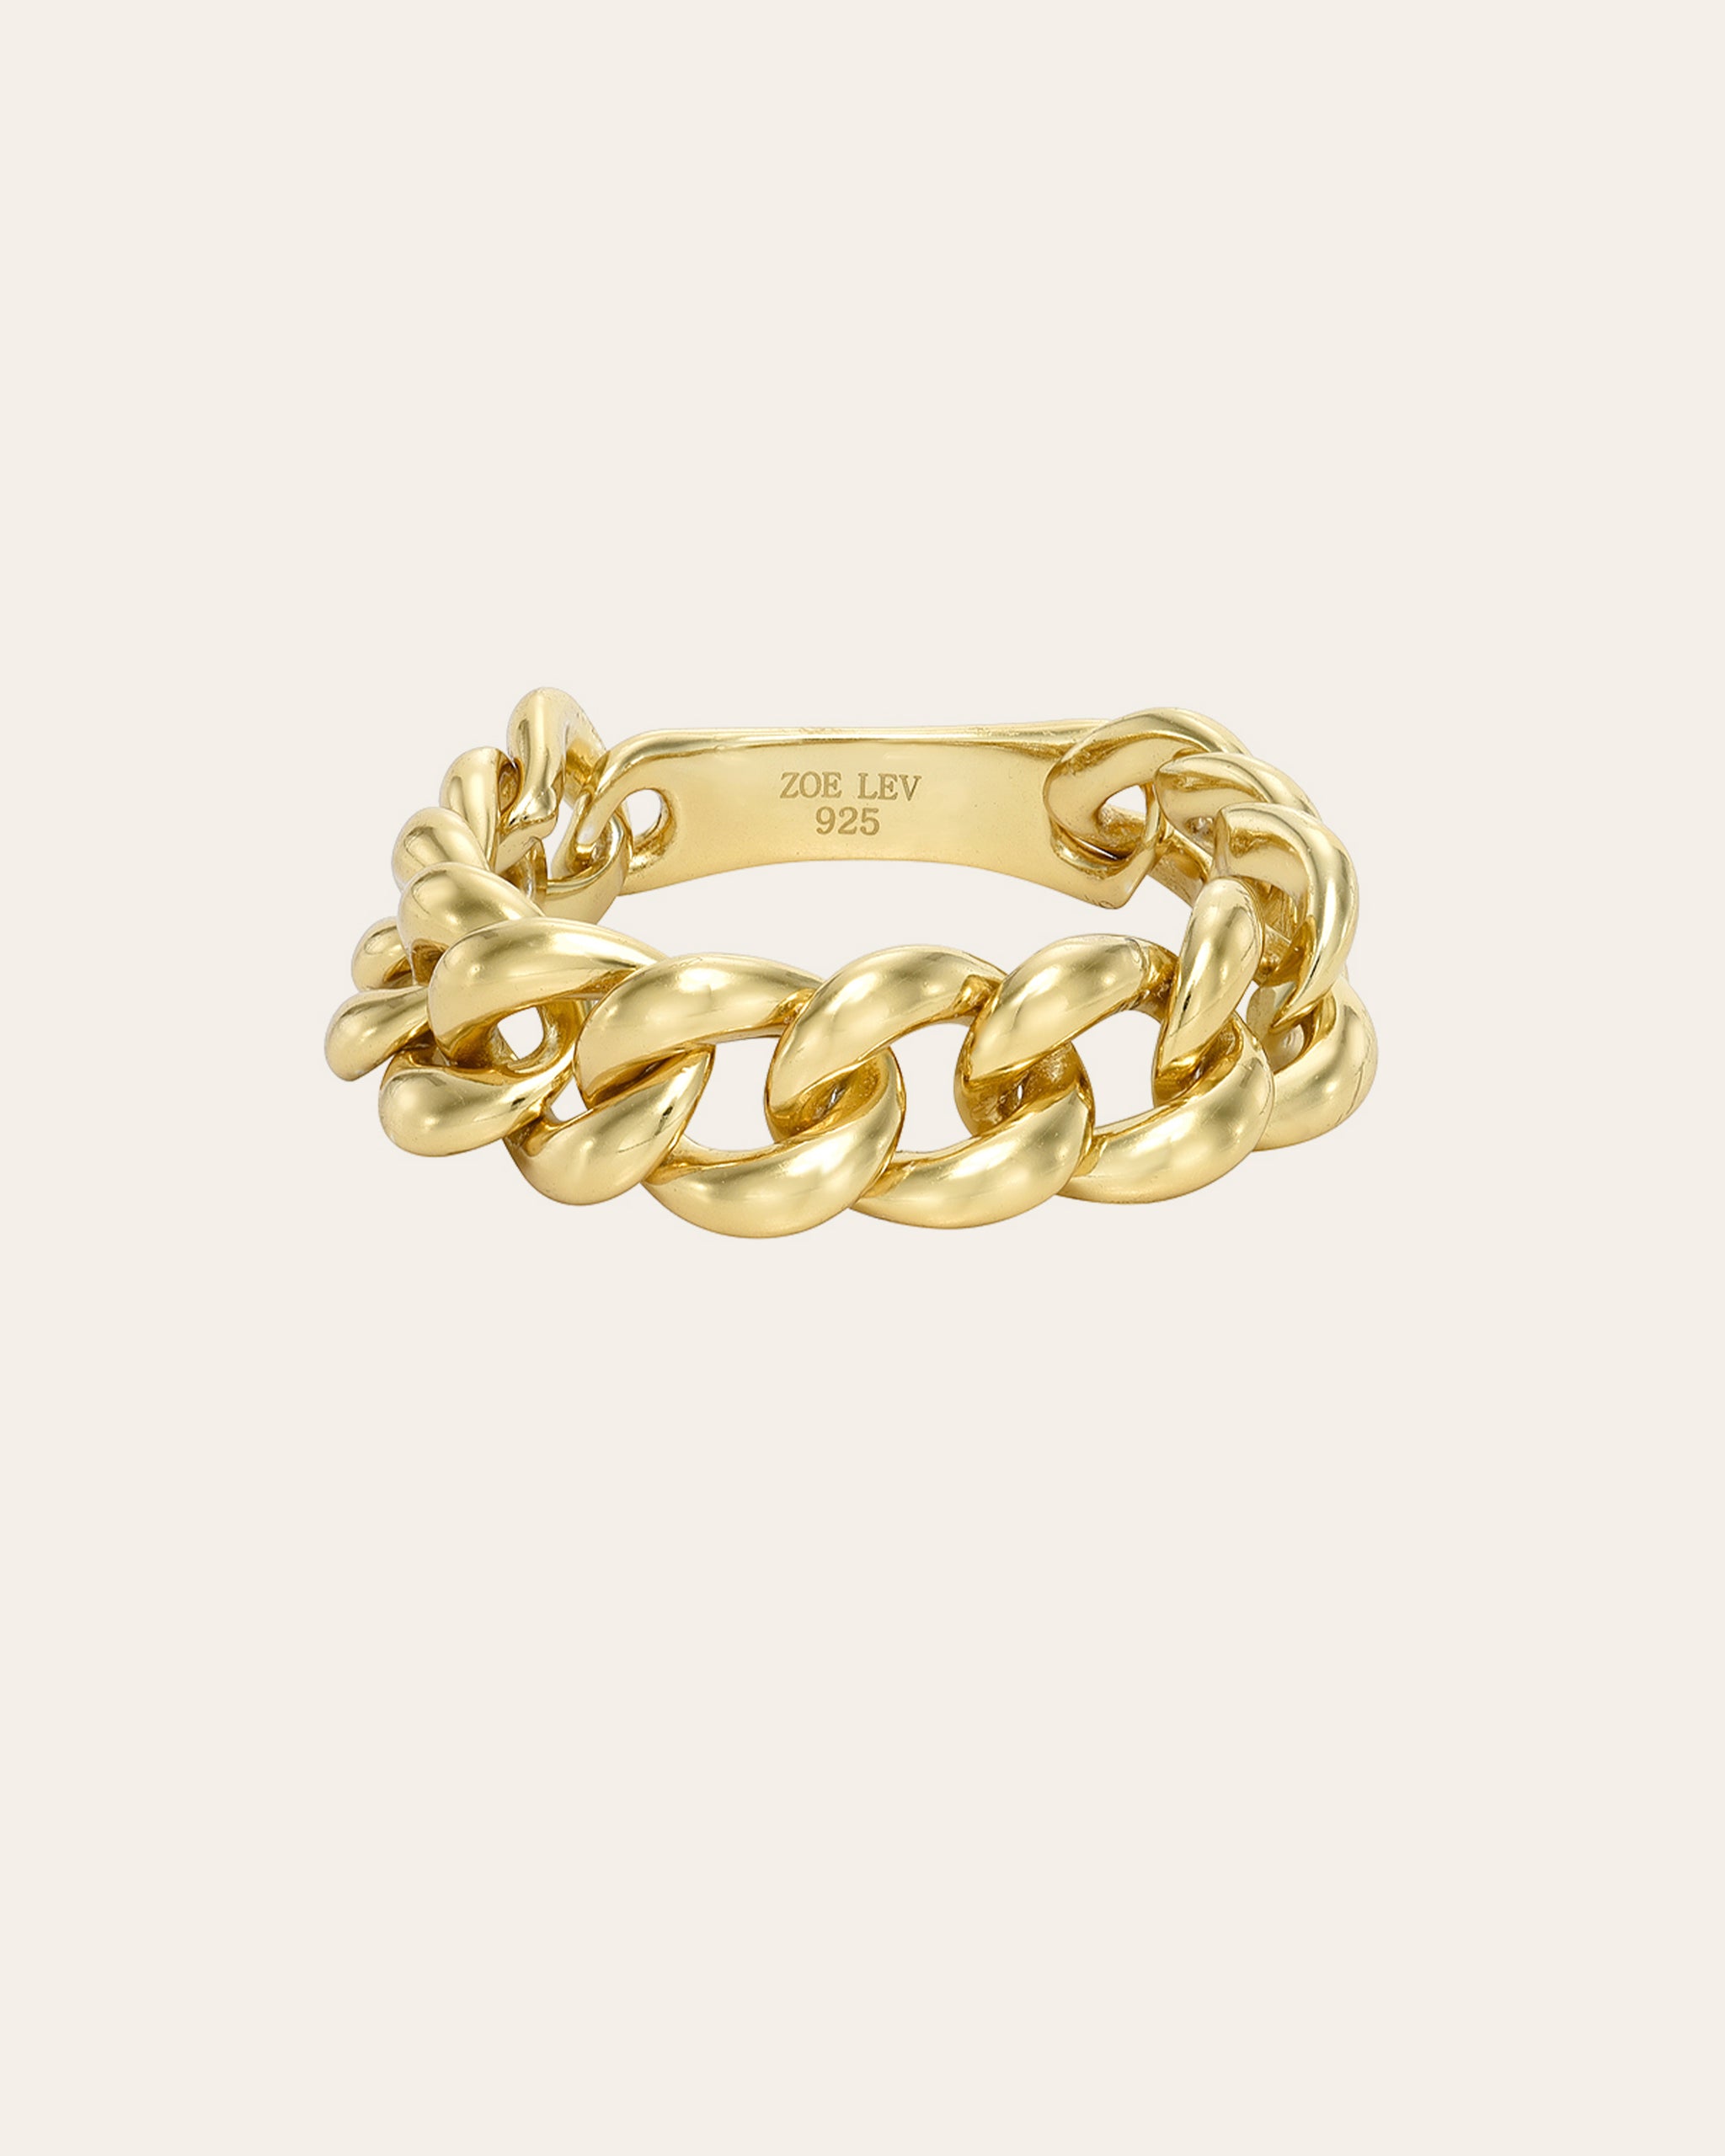 Gold Vermeil Cuban Link Ring - Zoe Lev Jewelry